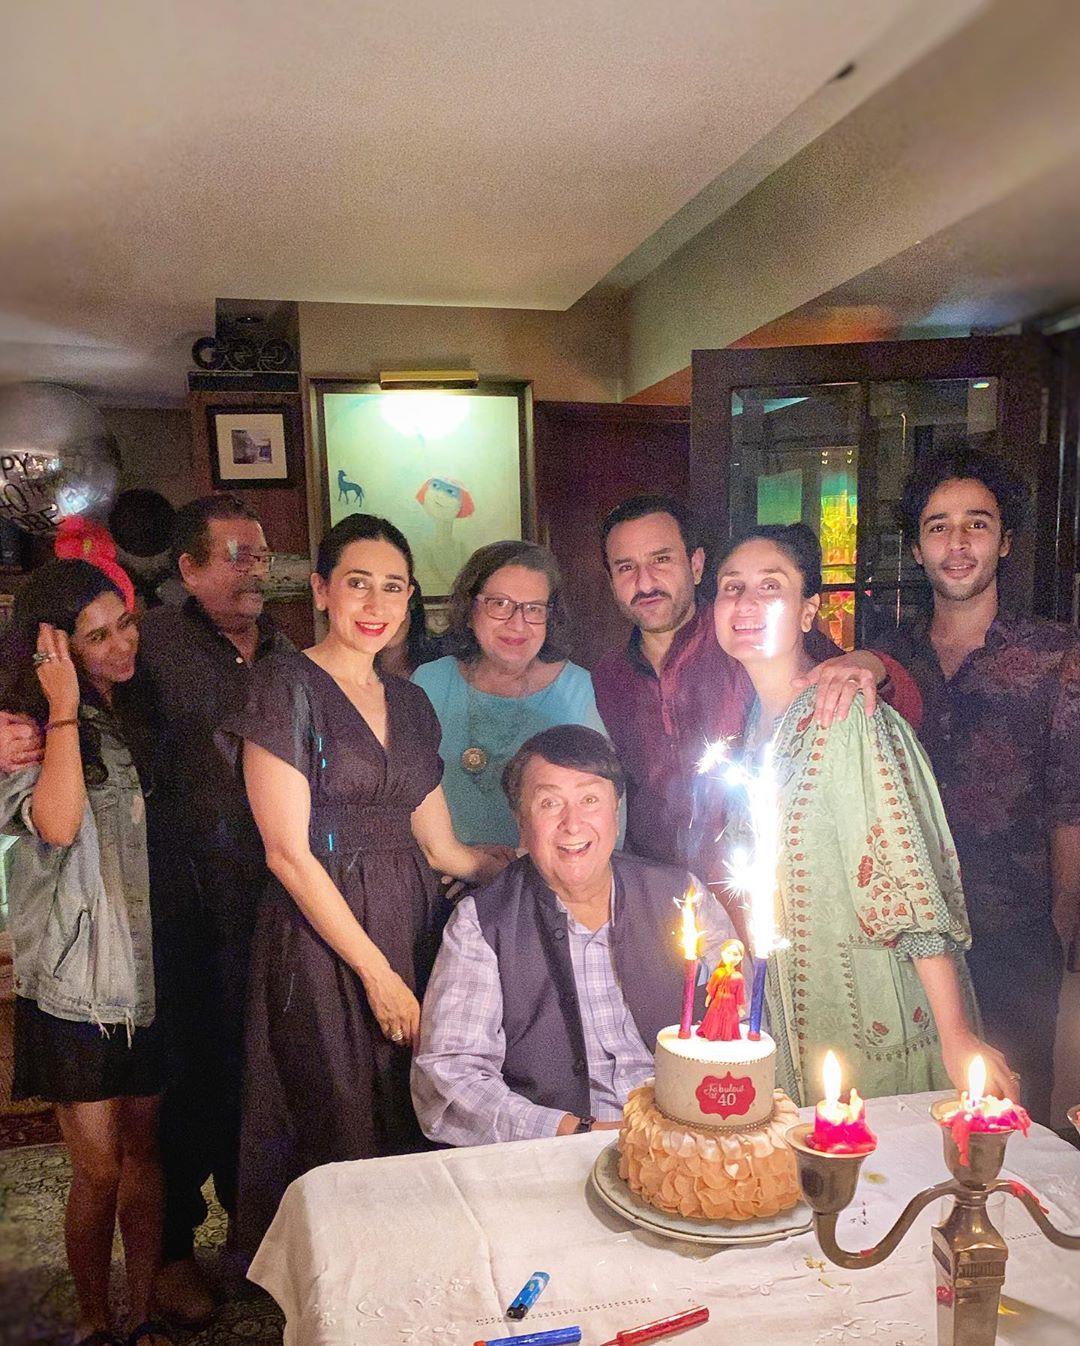 kareena kapoors birthday bash with family members